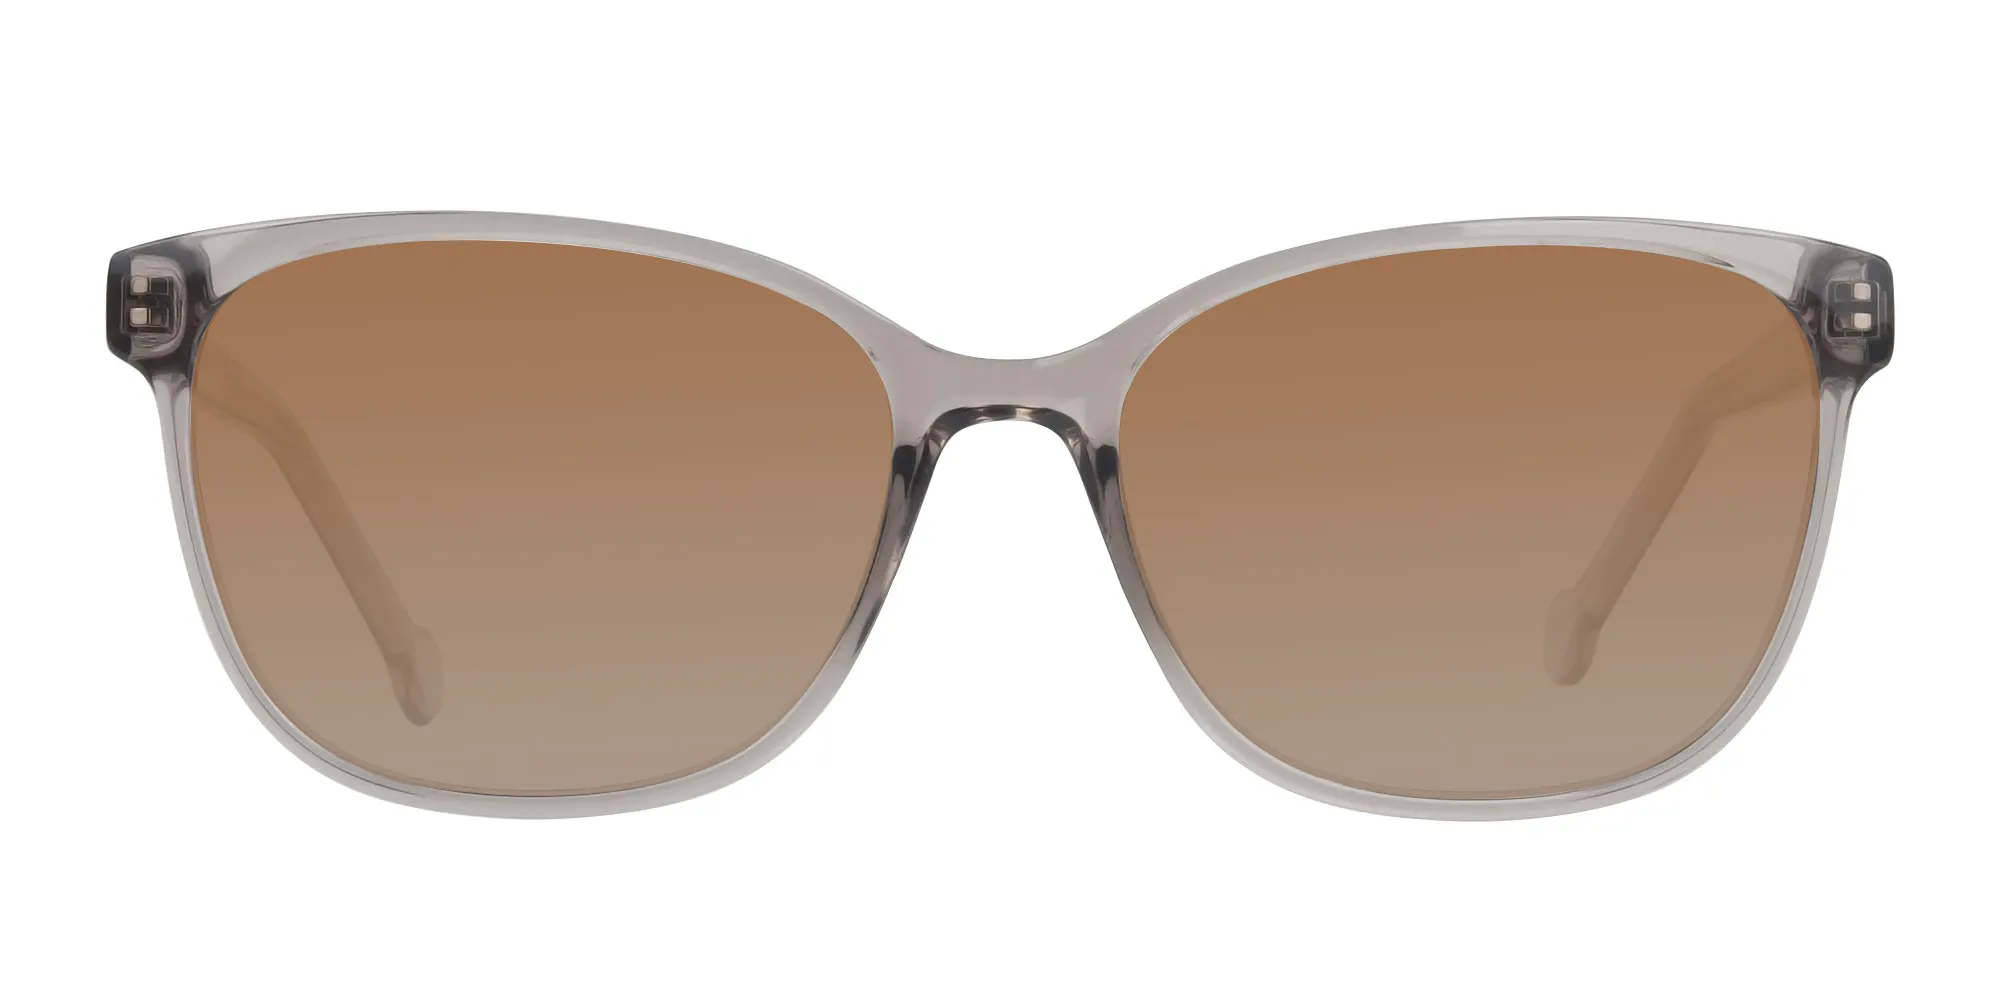 Crystal Grey Frame Sunglasses - 2